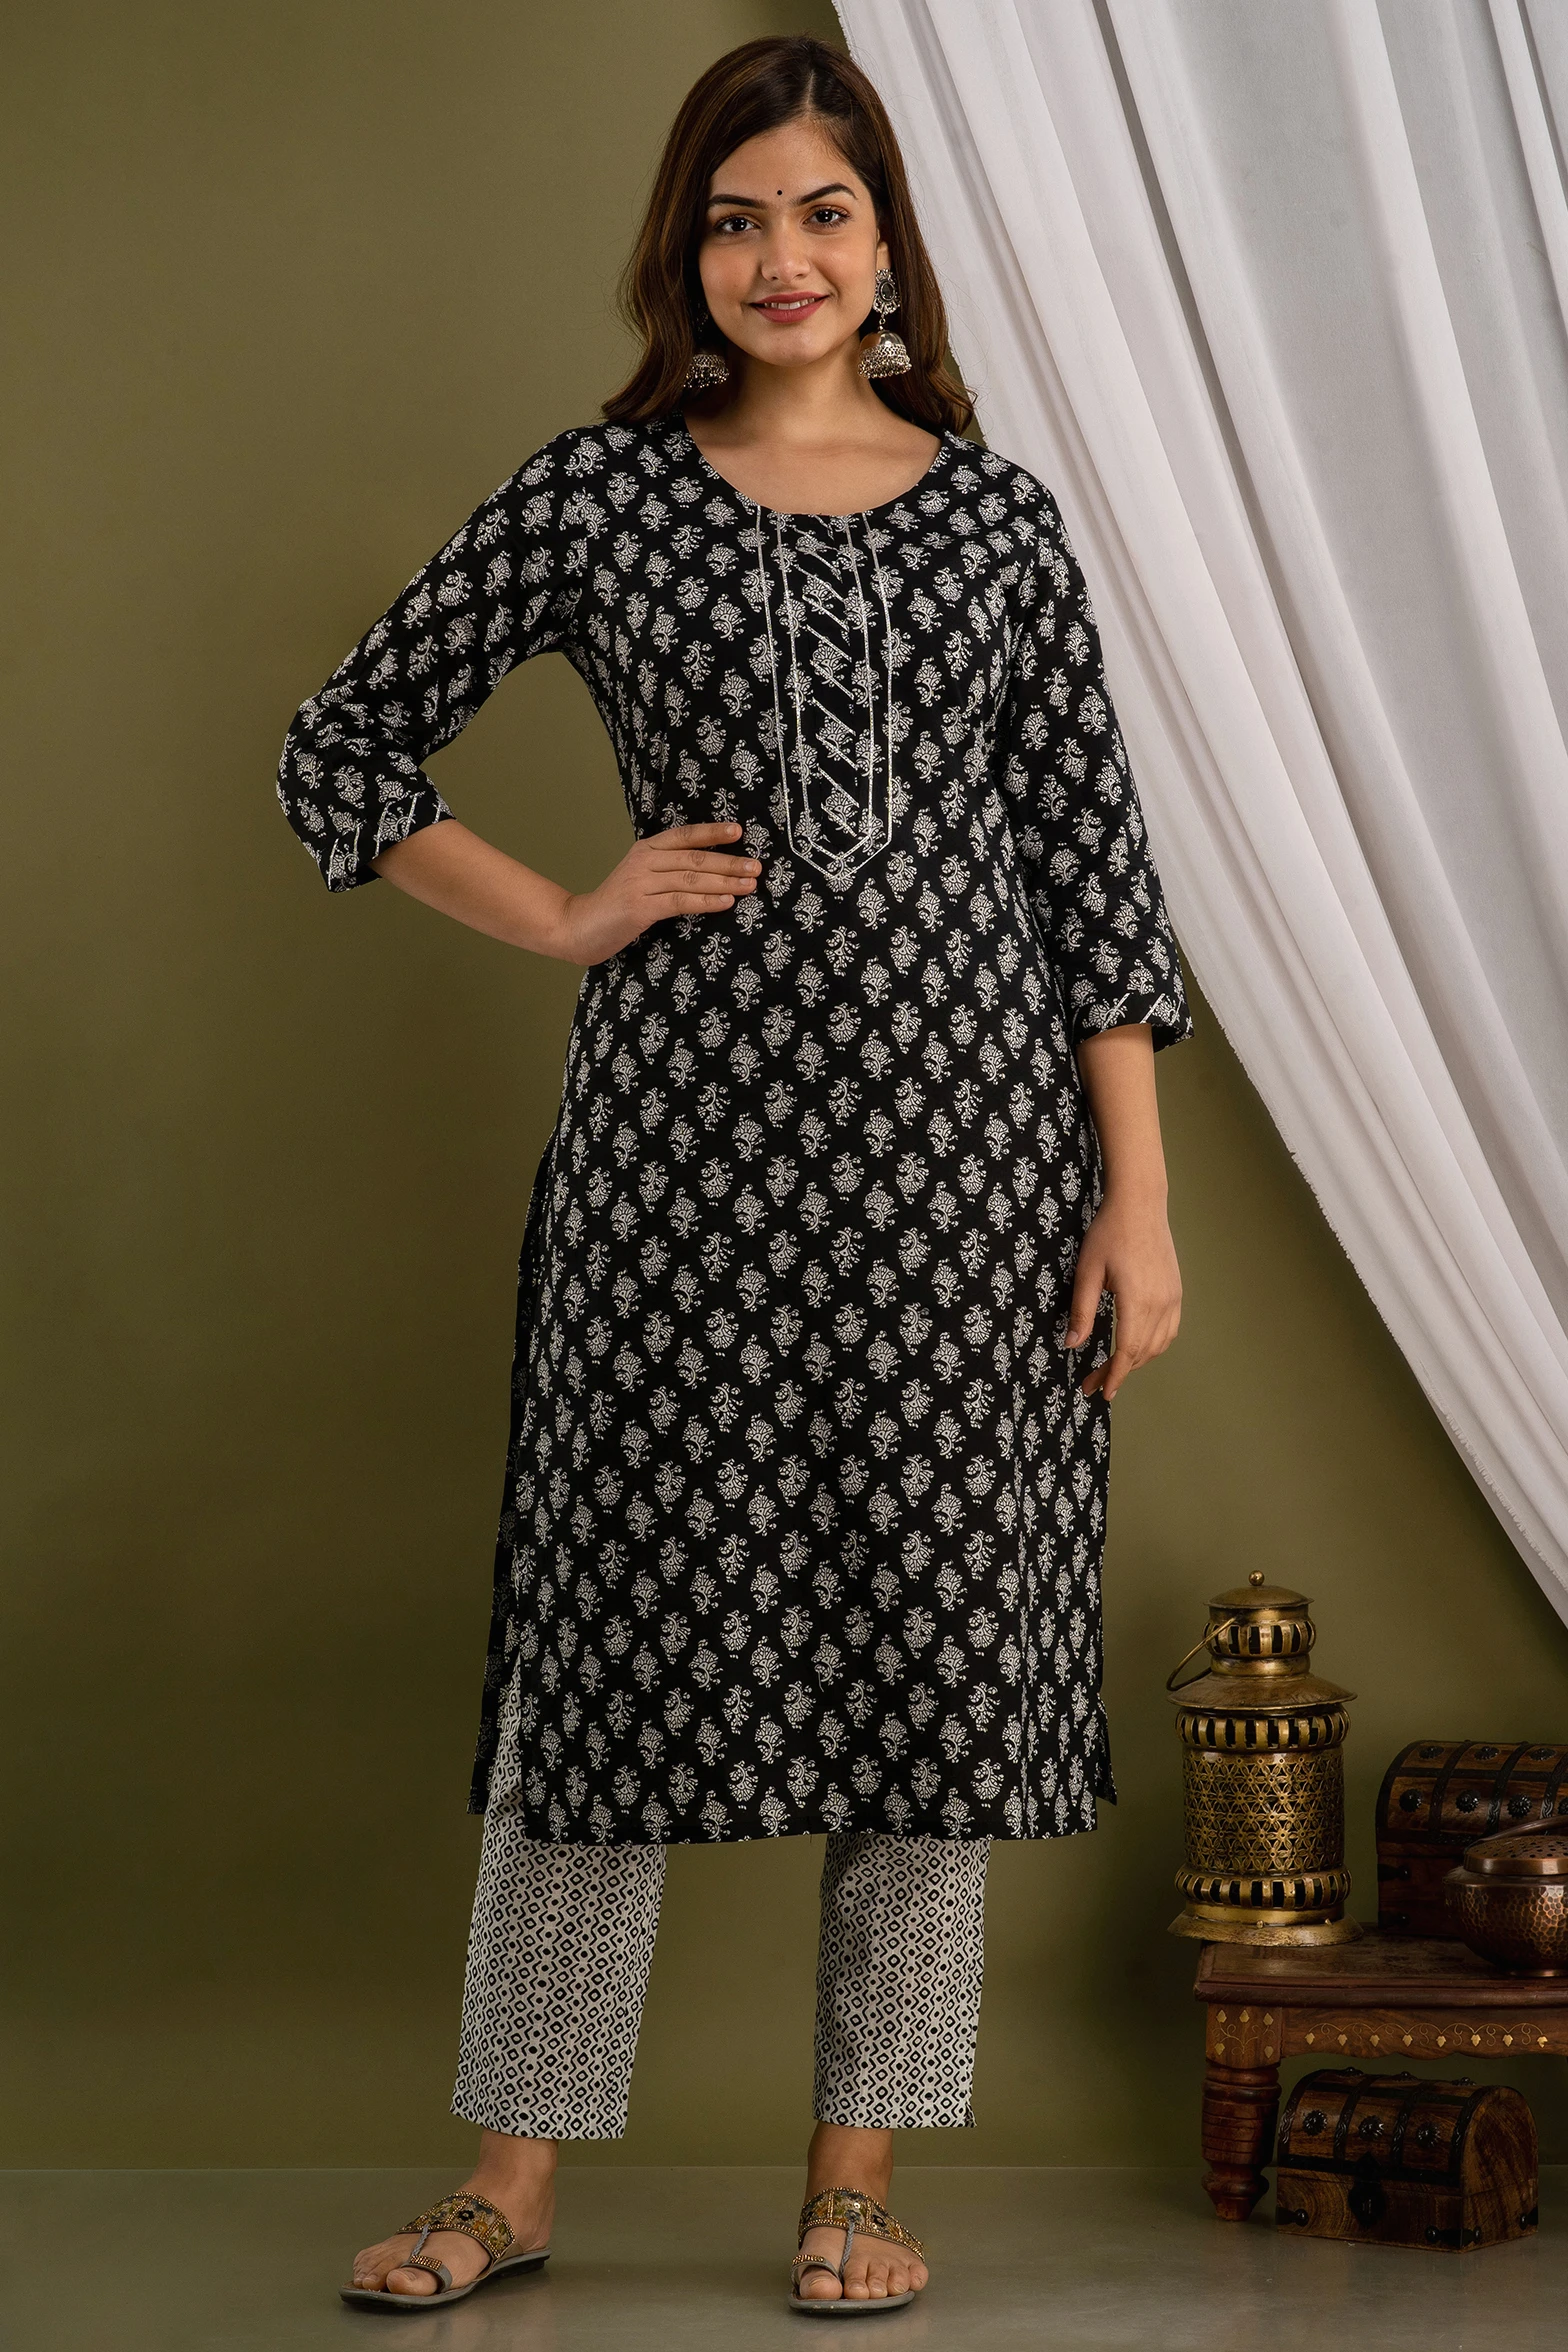 Exotic Black Colour Cotton Kurti With Kashmiri Motifs With Latest Fashion  Trend., Printed Cotton Kurti online, Printed Cotton Kurti Manufacturer,  प्रिंटेड कॉटन कुर्ती - Kyra International, Jammu | ID: 26442121673